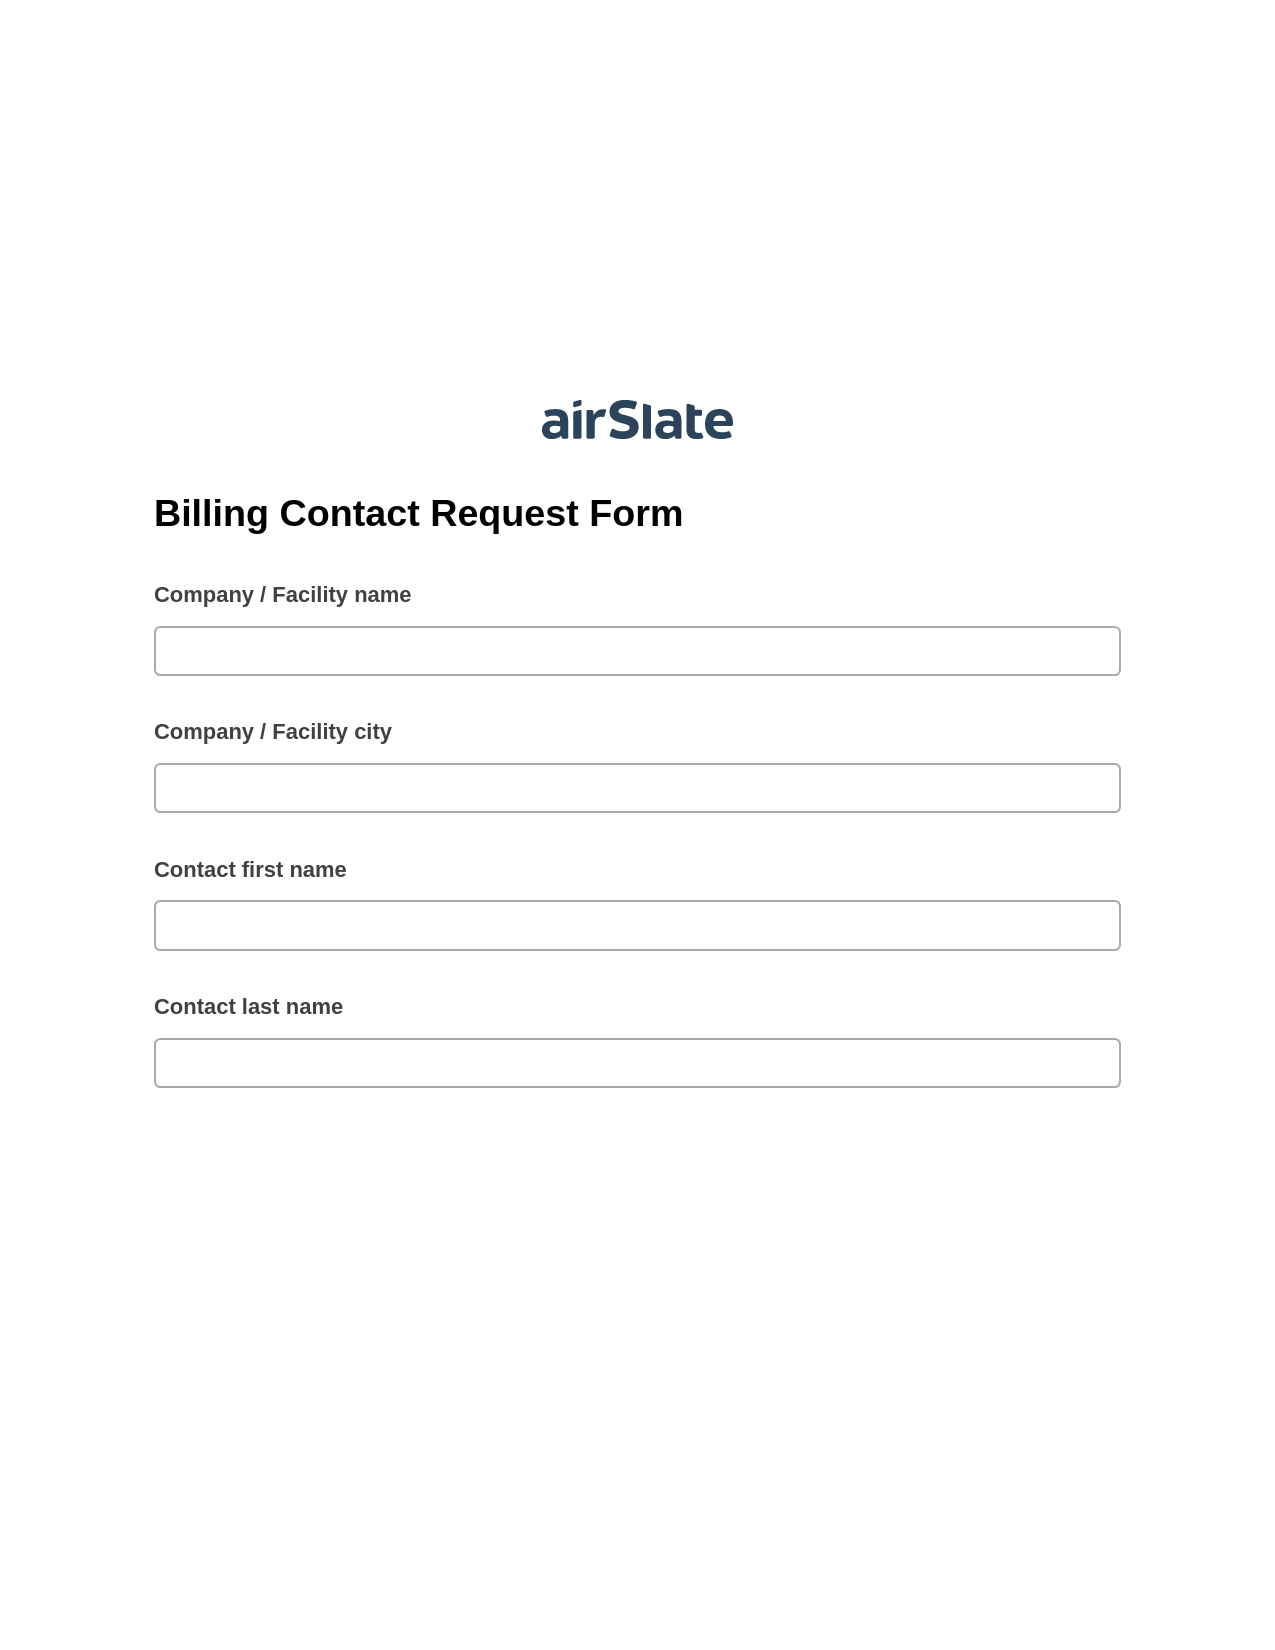 Billing Contact Request Form Pre-fill Dropdowns from MySQL Bot, SendGrid send Campaign bot, Dropbox Bot